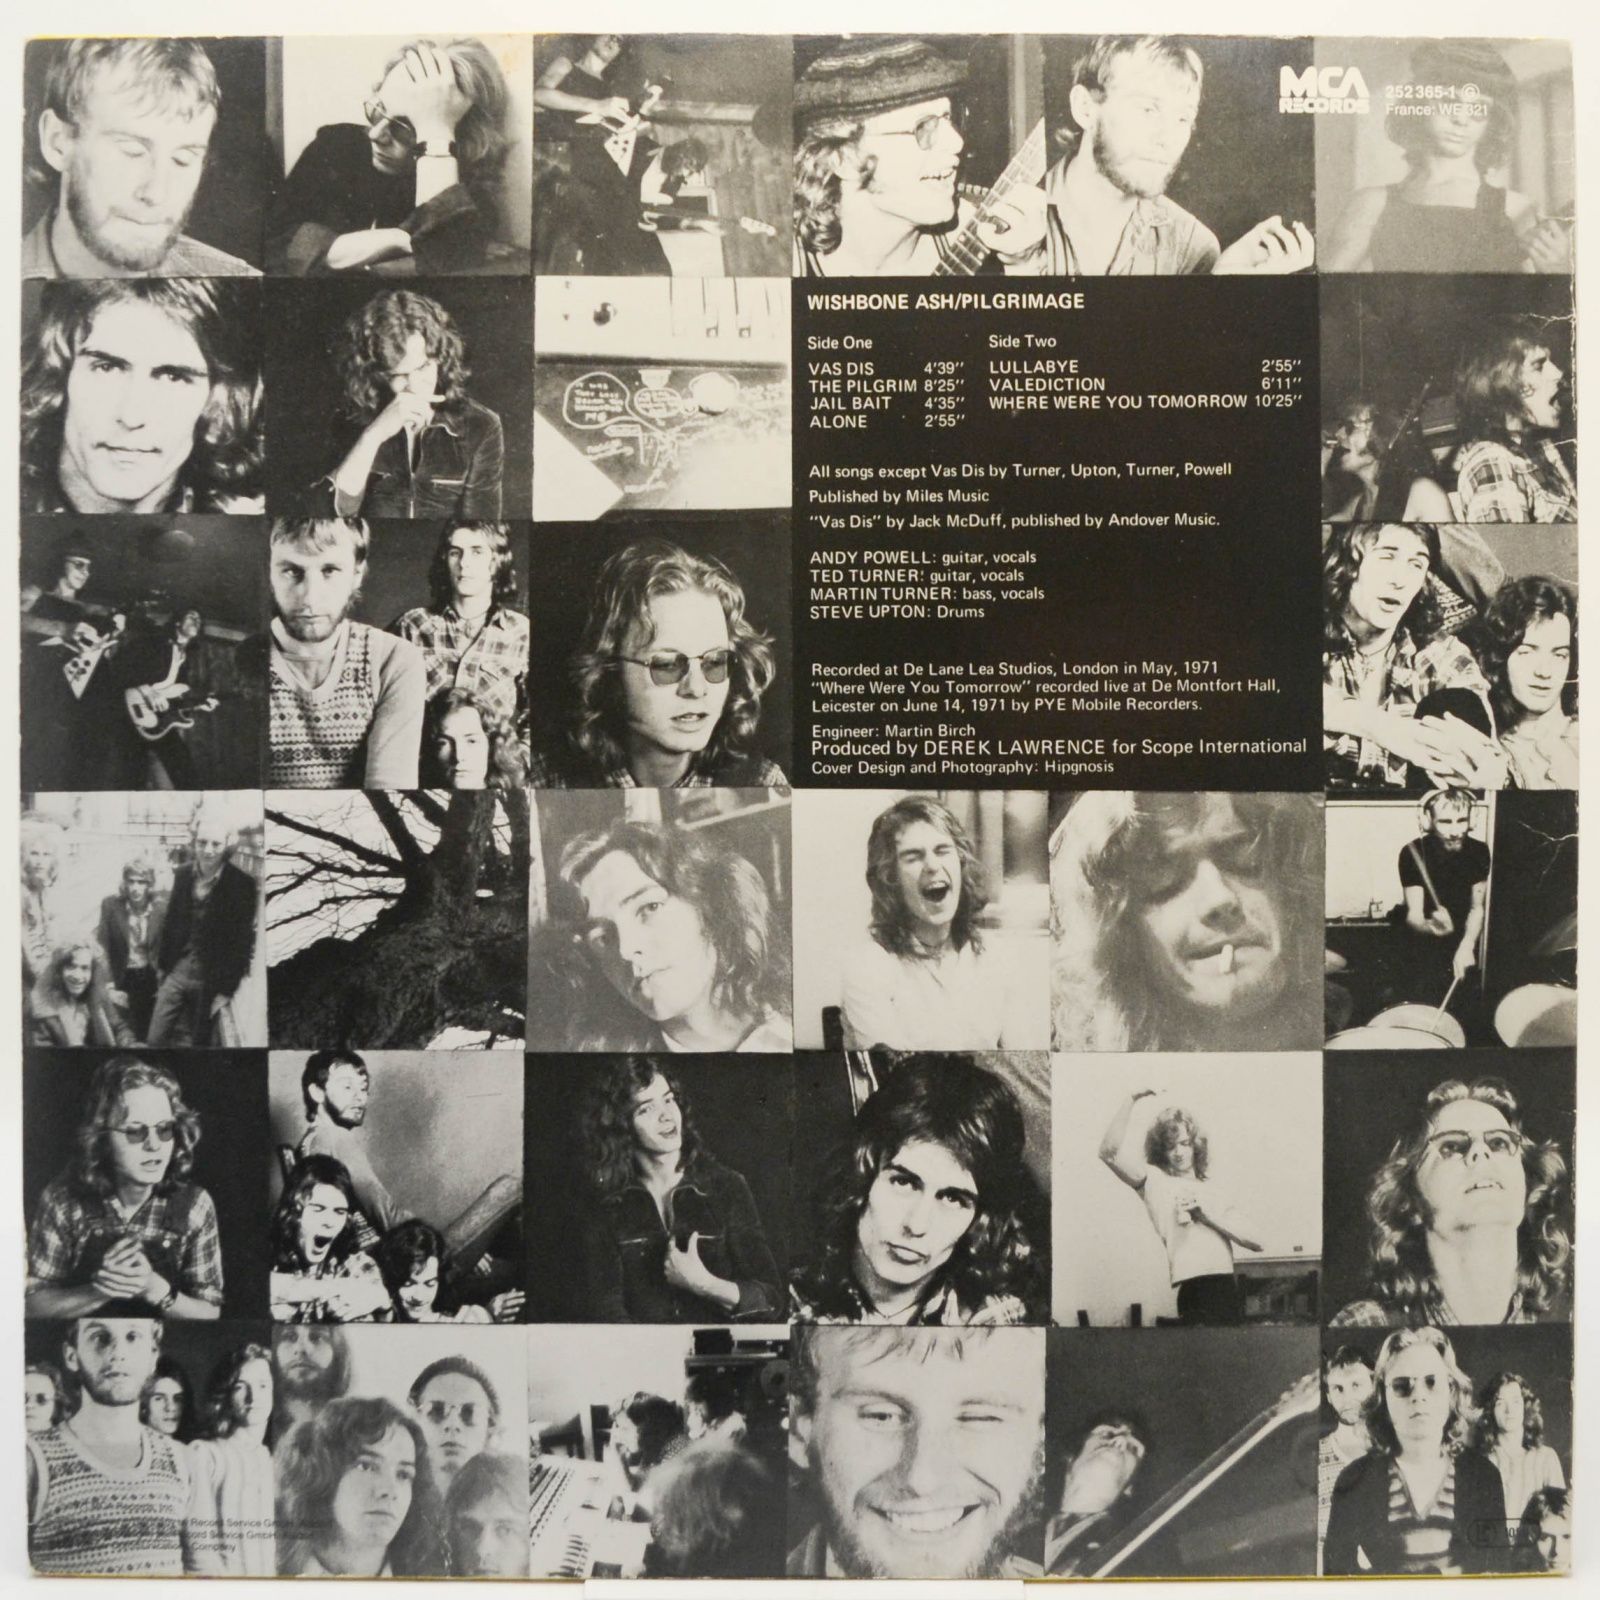 Wishbone Ash — Pilgrimage, 1971